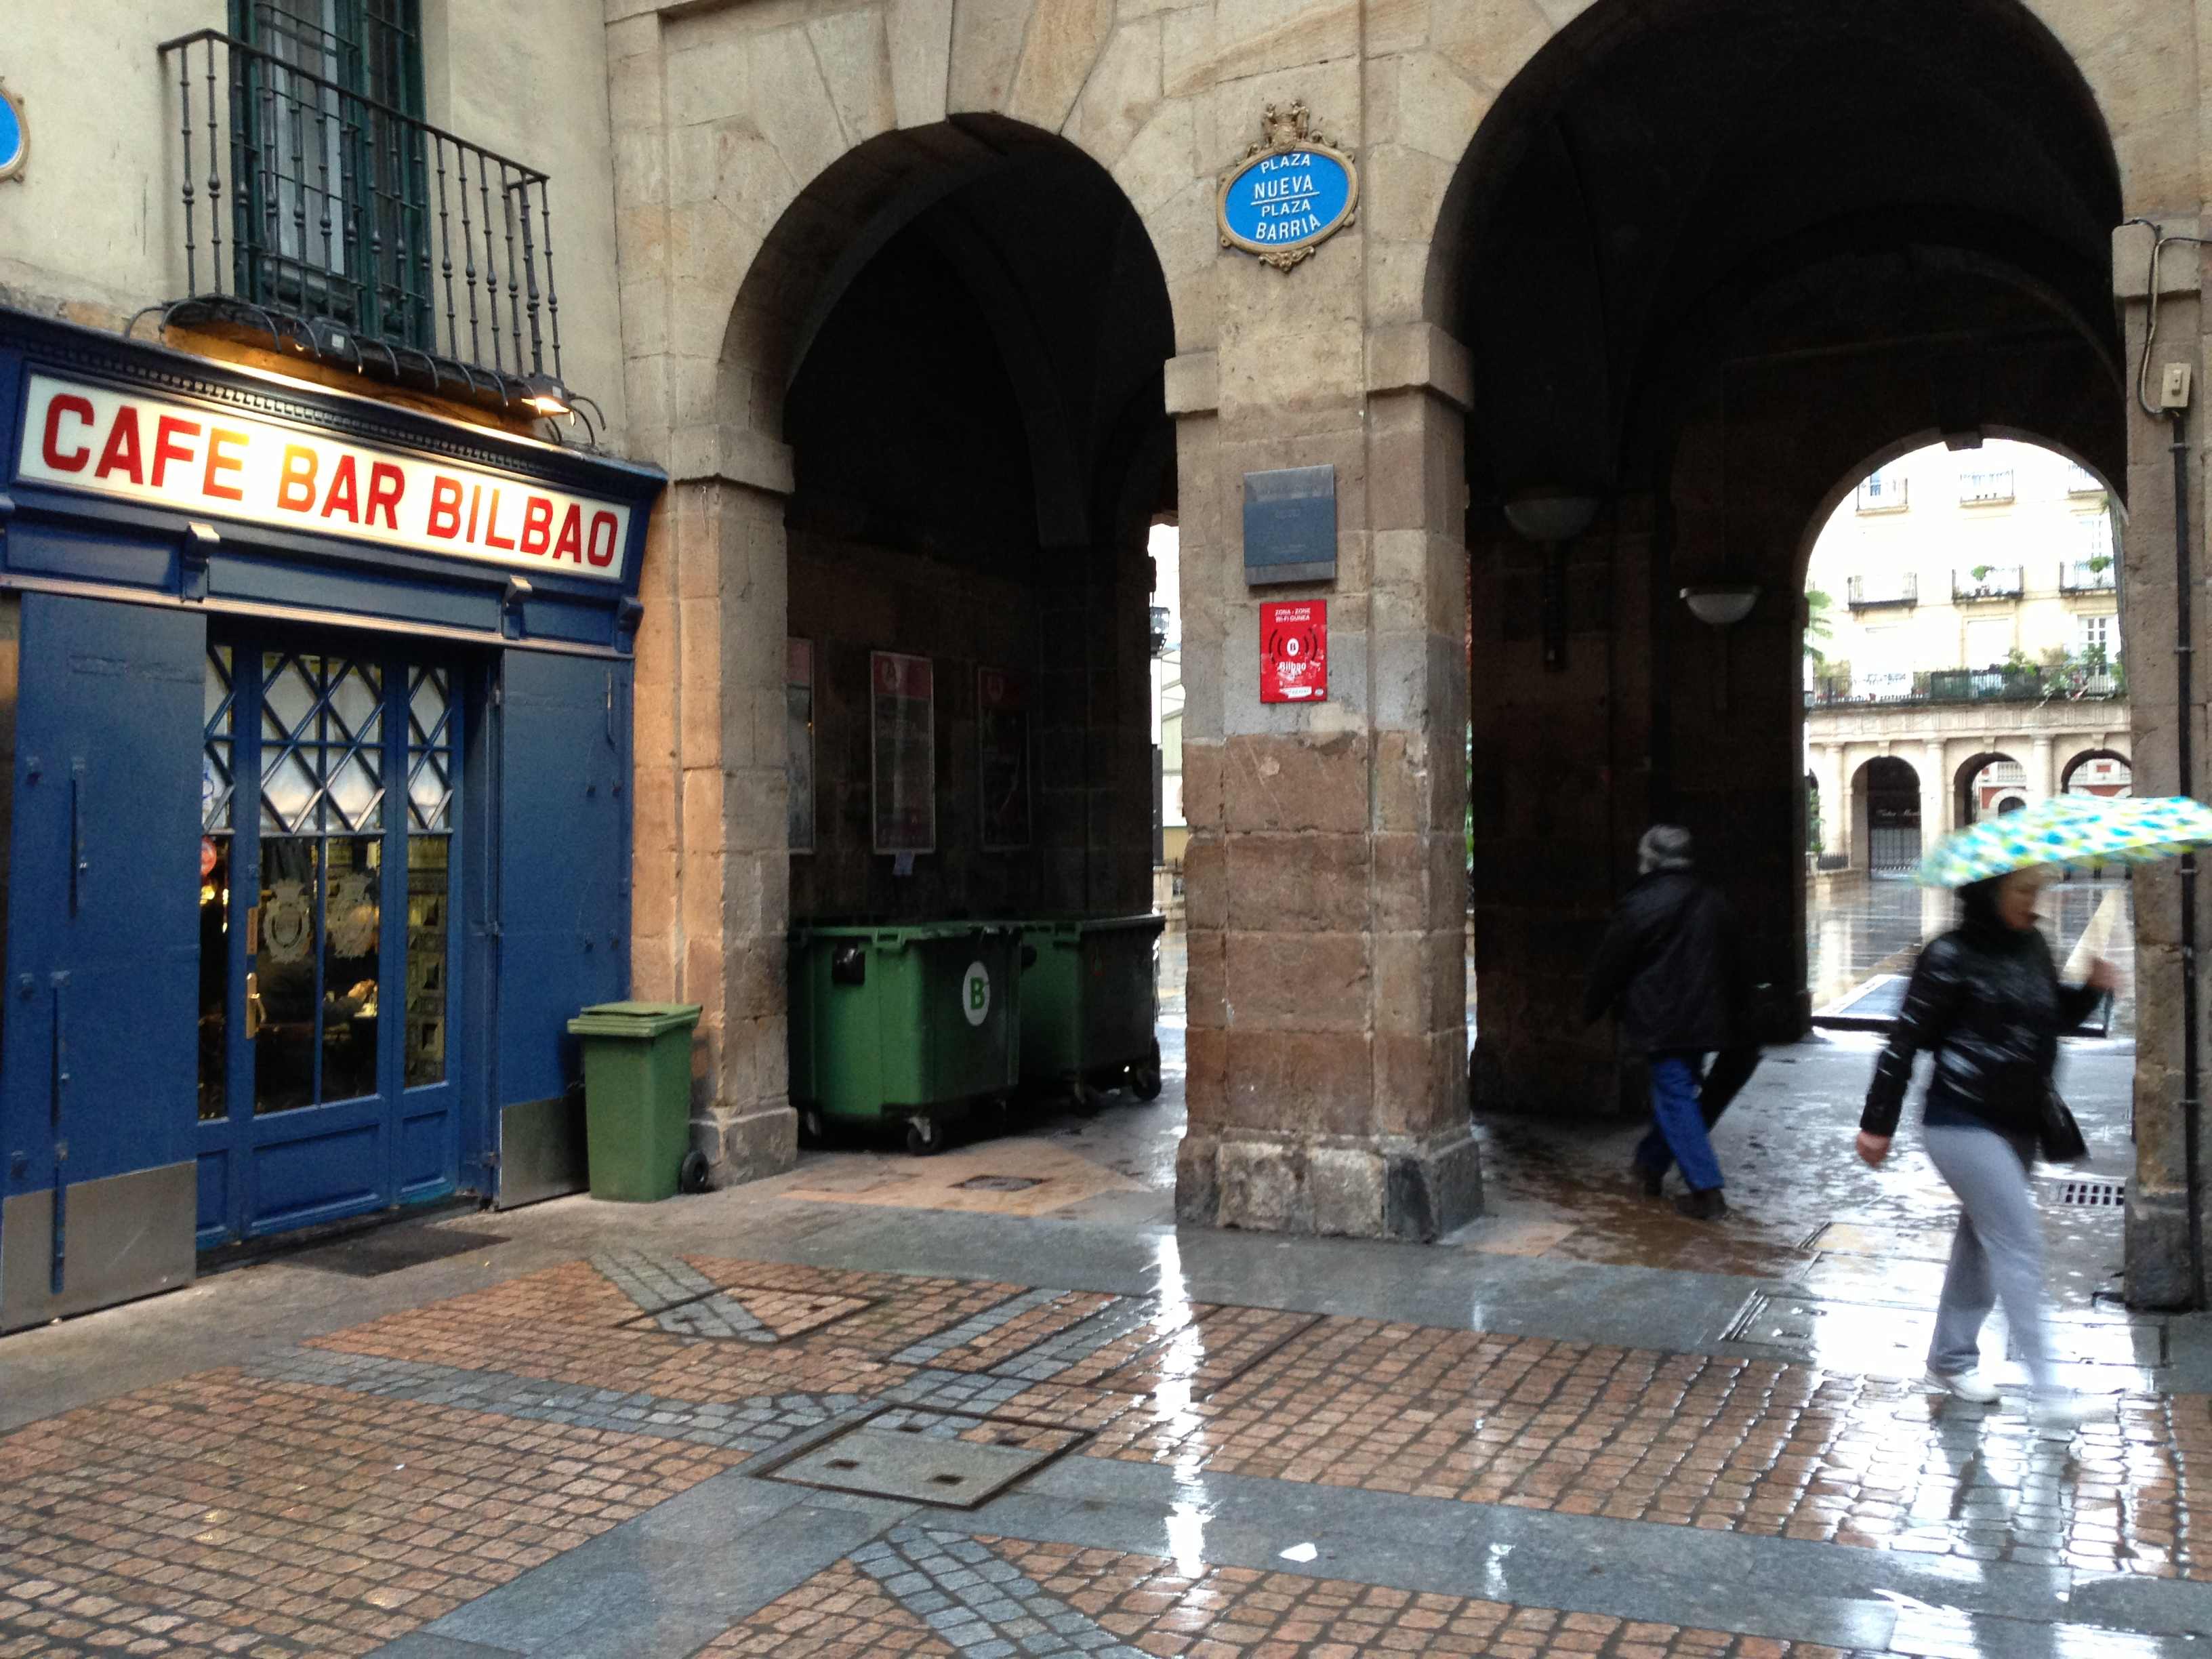 Looking into the Plaza Nueva in Bilbao, February 2013.